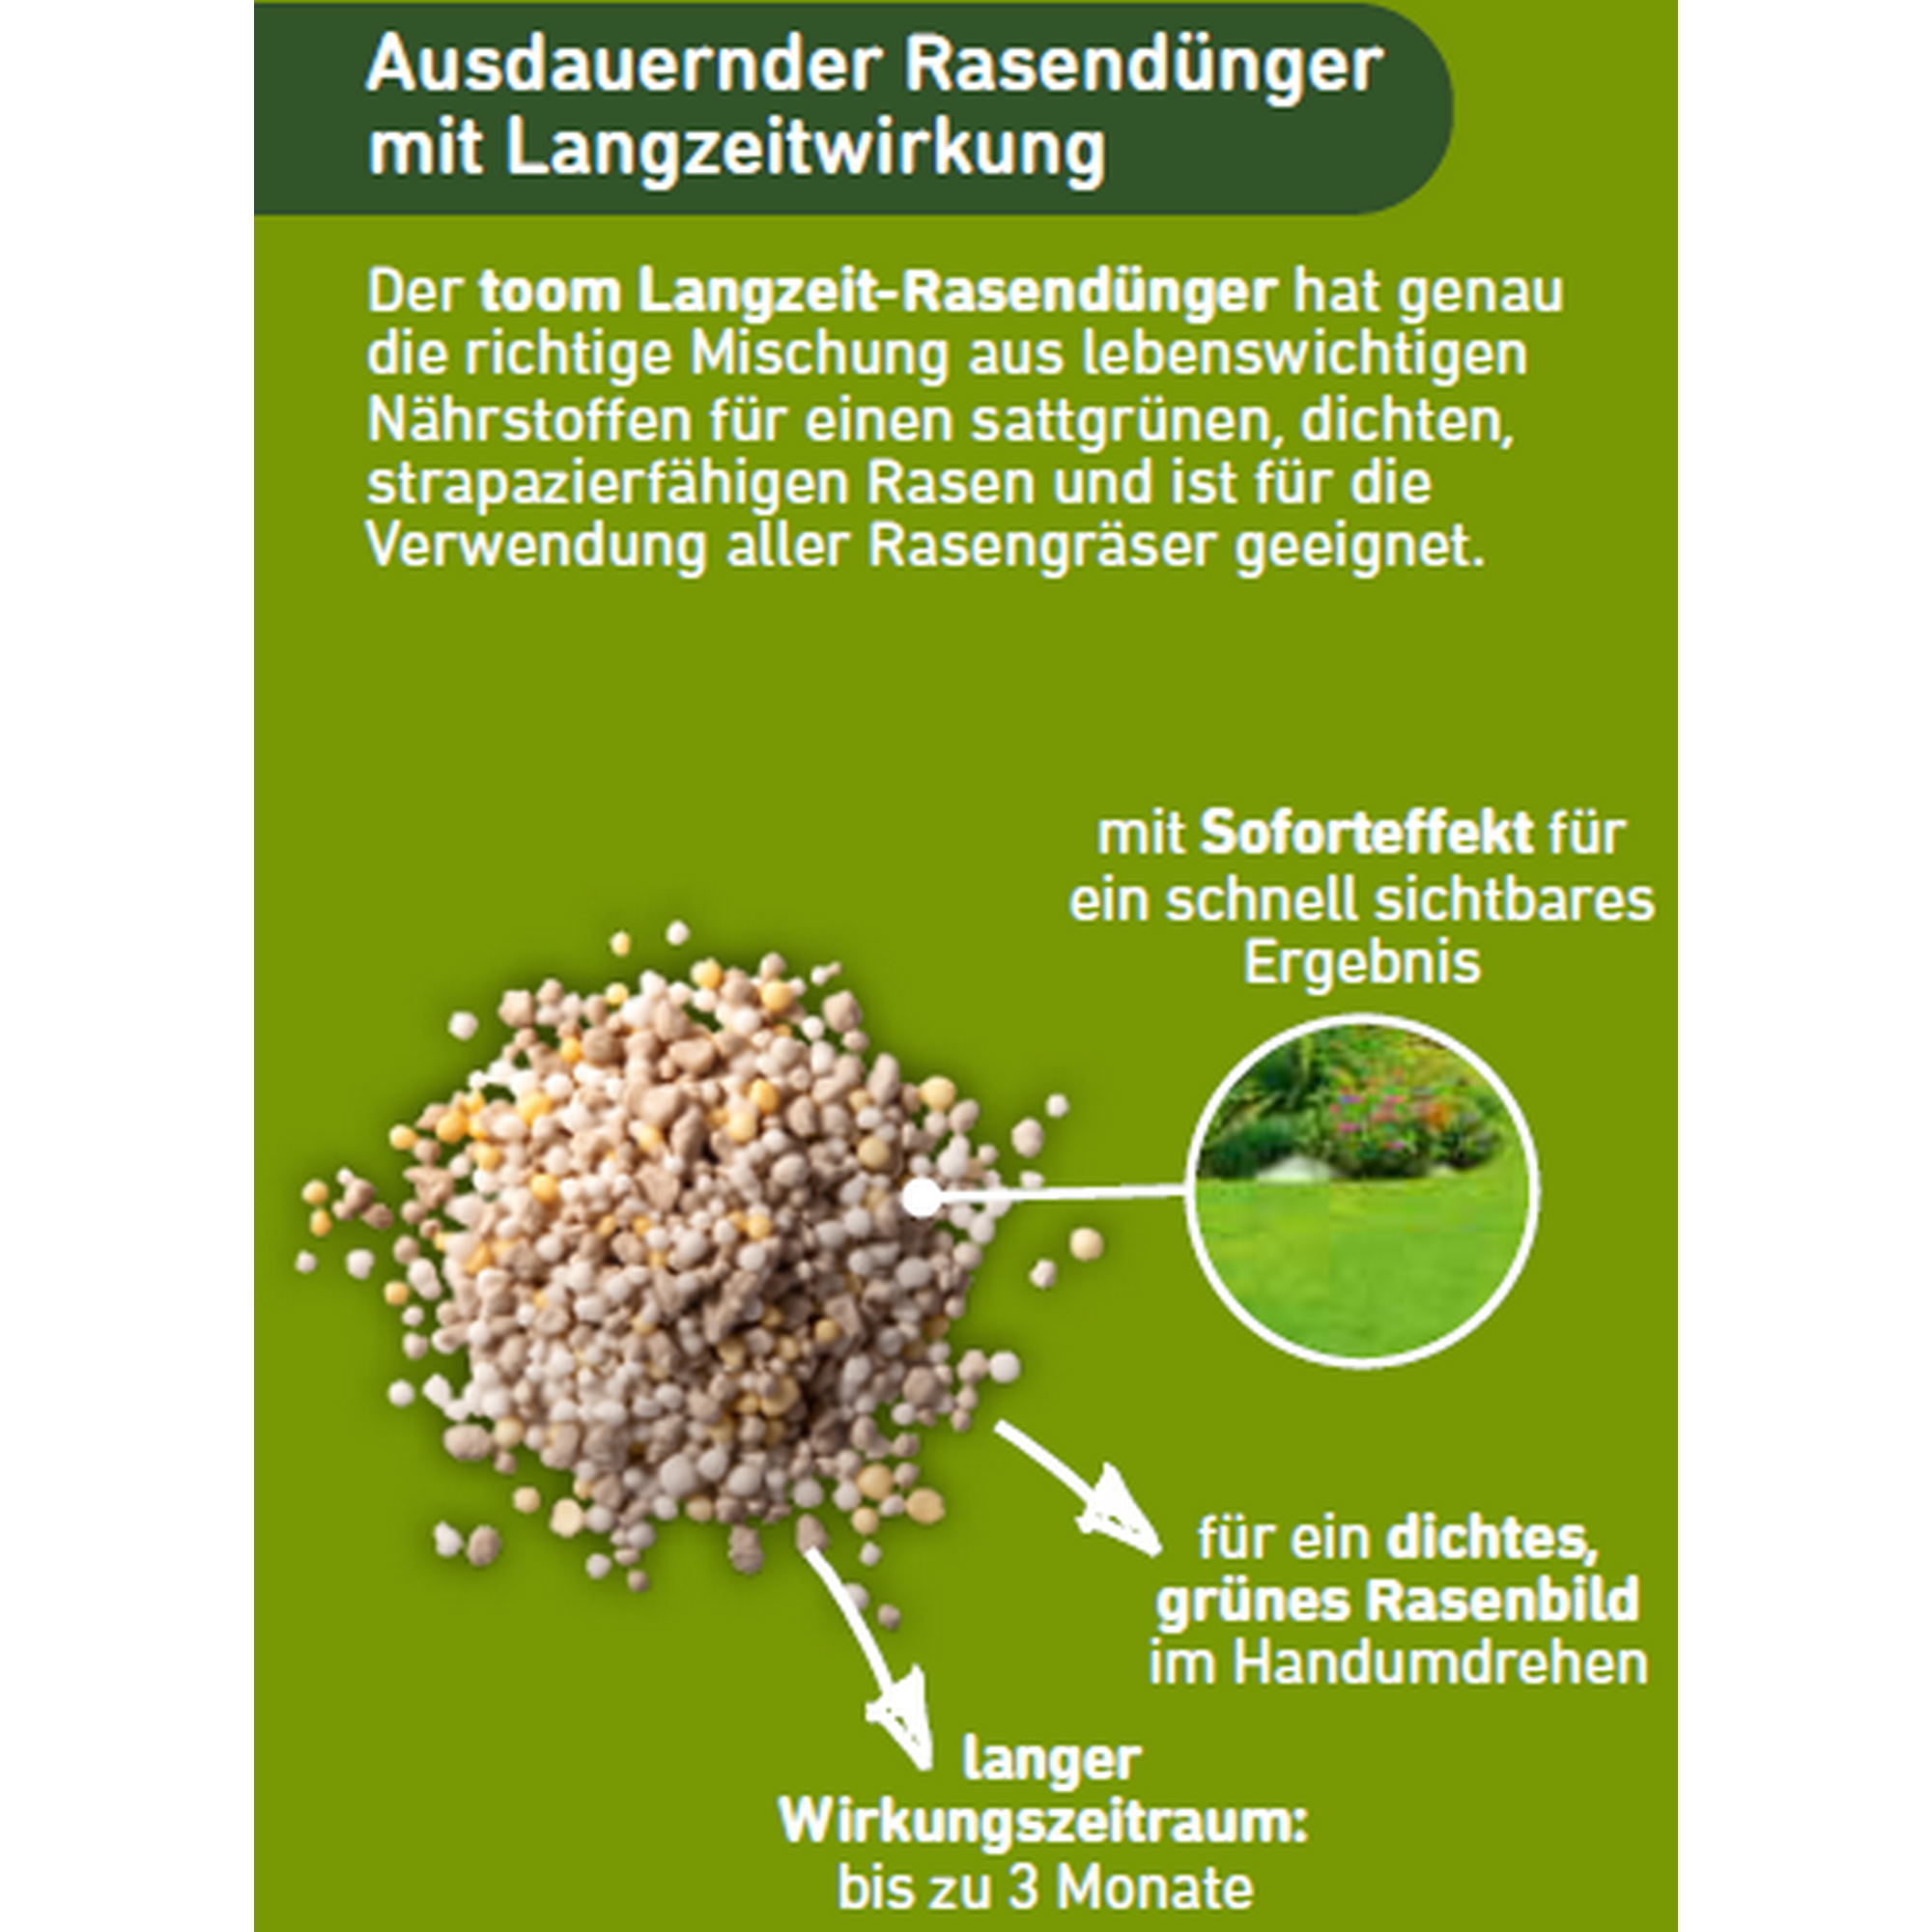 Langzeit-Rasendünger 10 kg + product picture